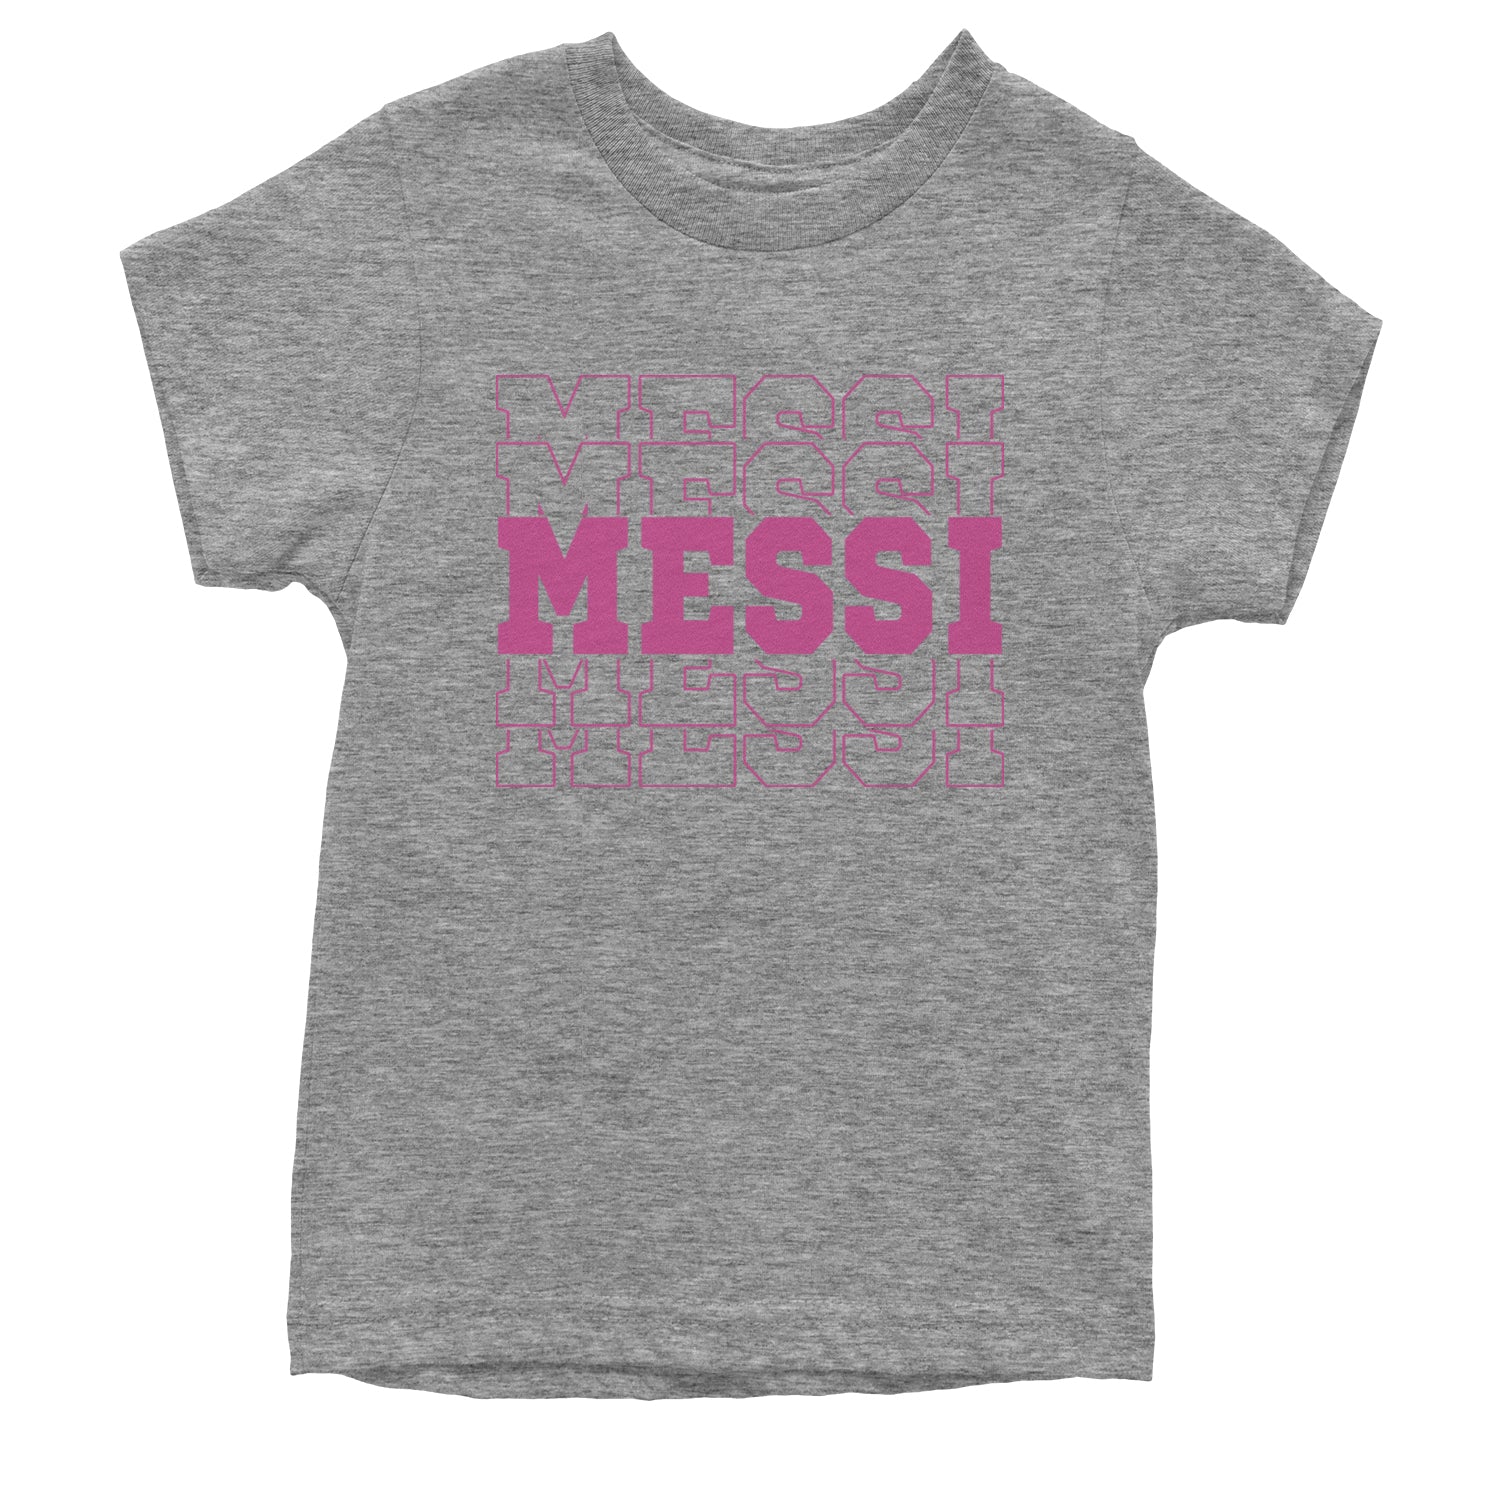 Messi Miami Futbol Youth T-shirt